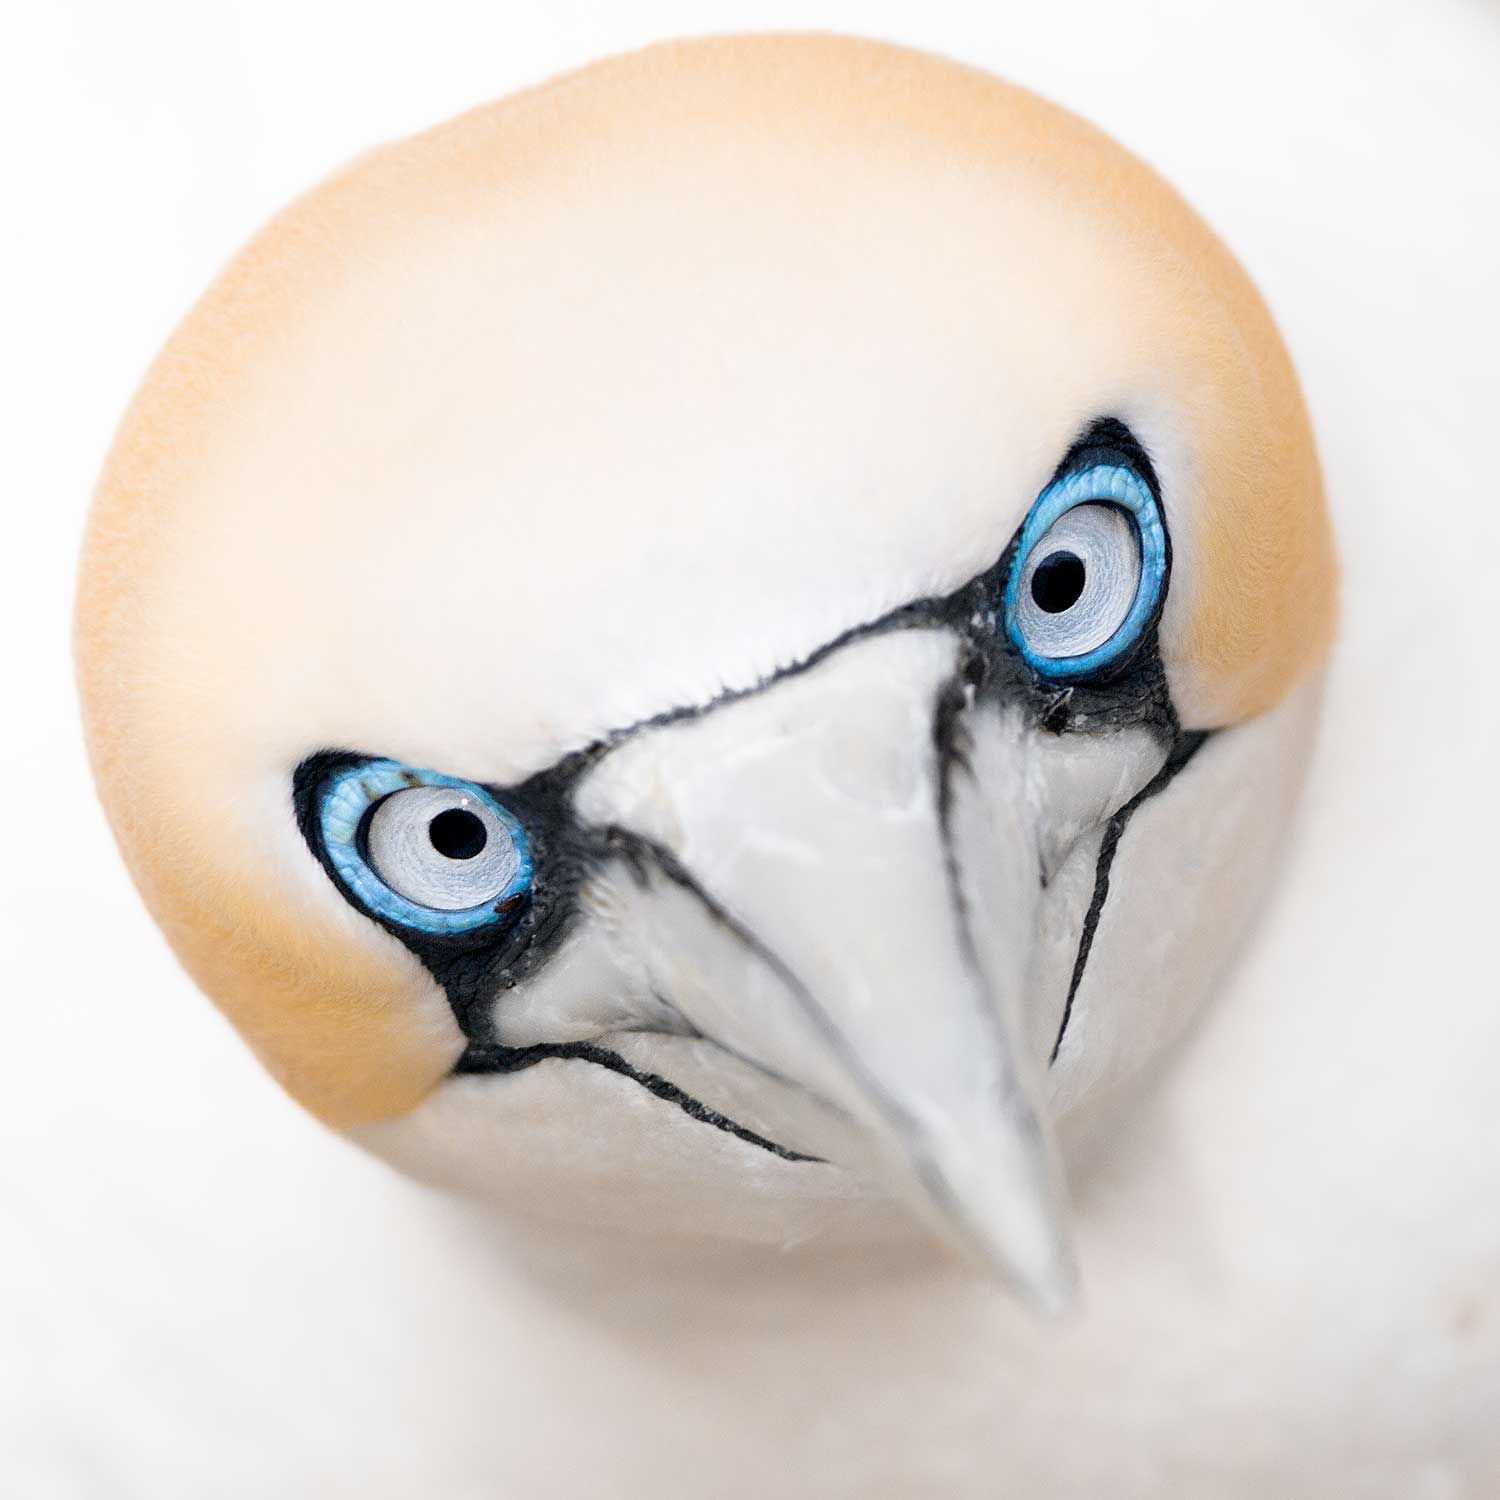 bird selfie british wildlife photography award melvin redekar